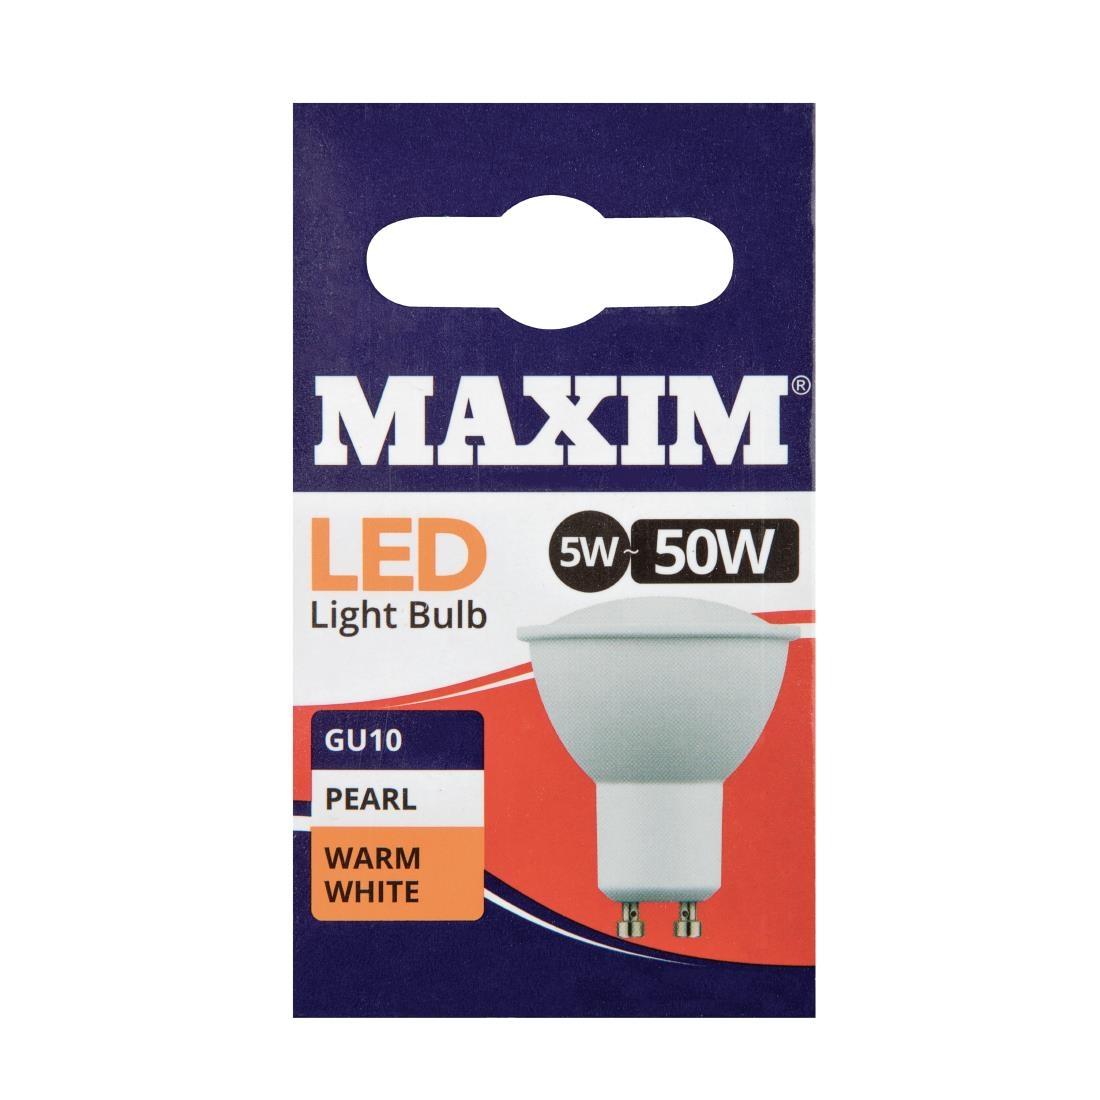 Status Maxim LED GU10 Pearl Warm White 5W (Pack of 10) - HC646  - 2